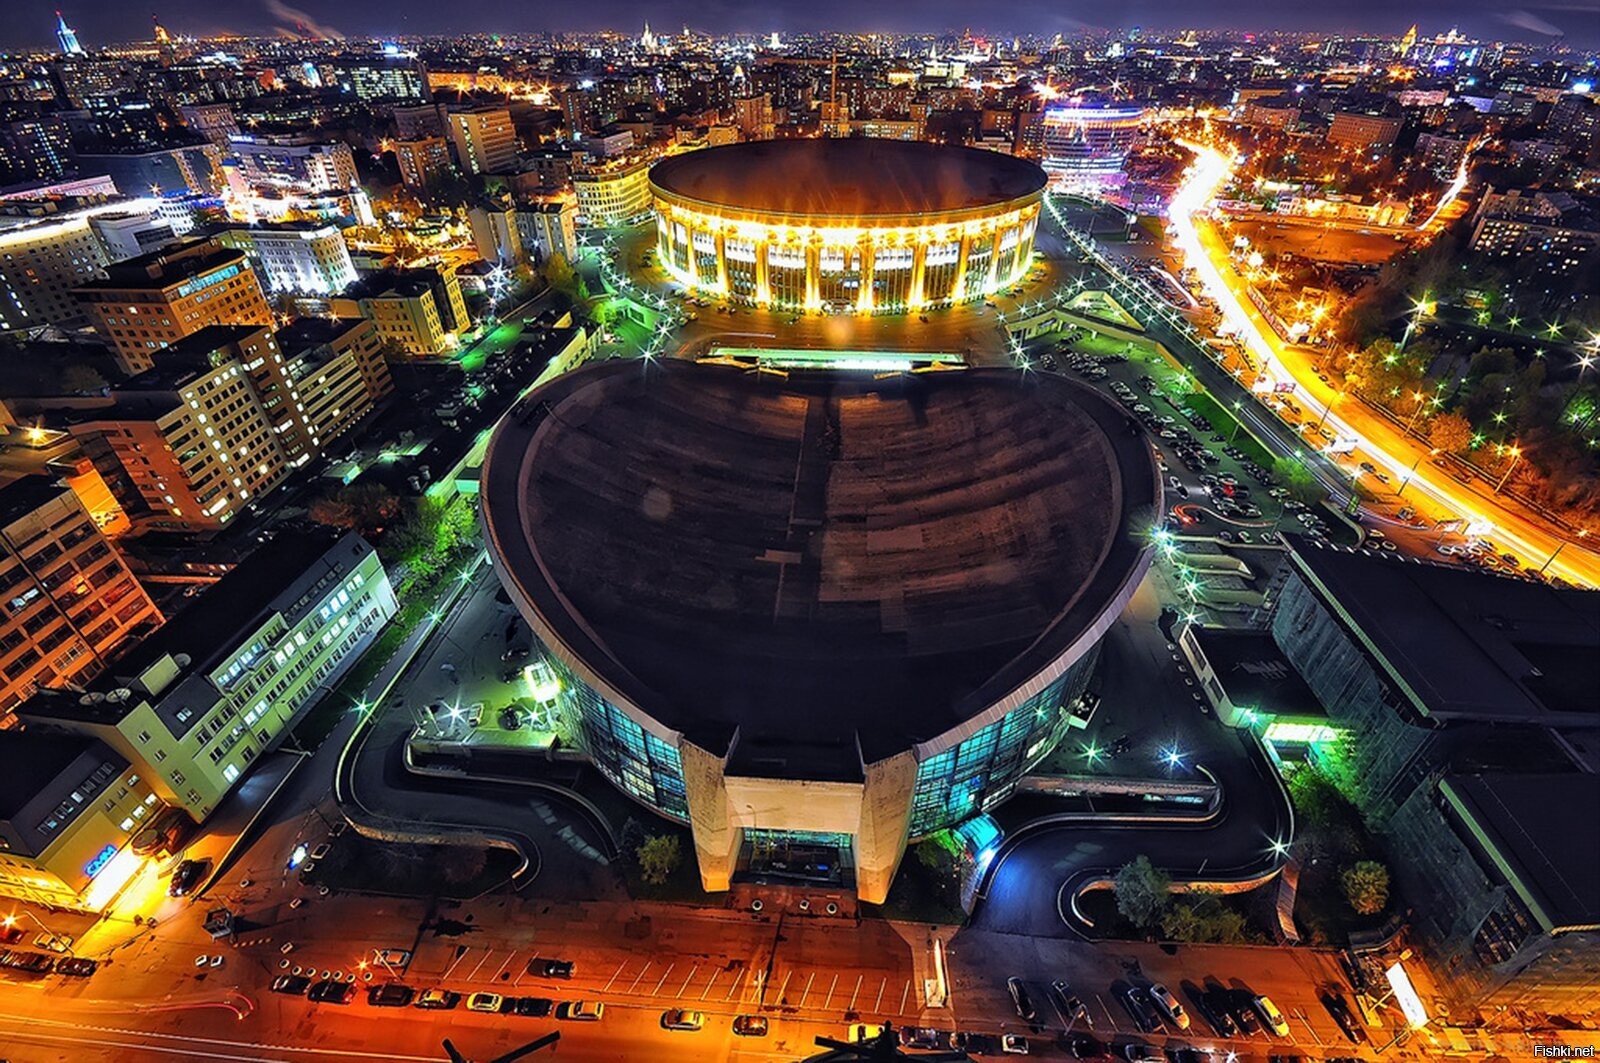 Стадион олимпийский в москве